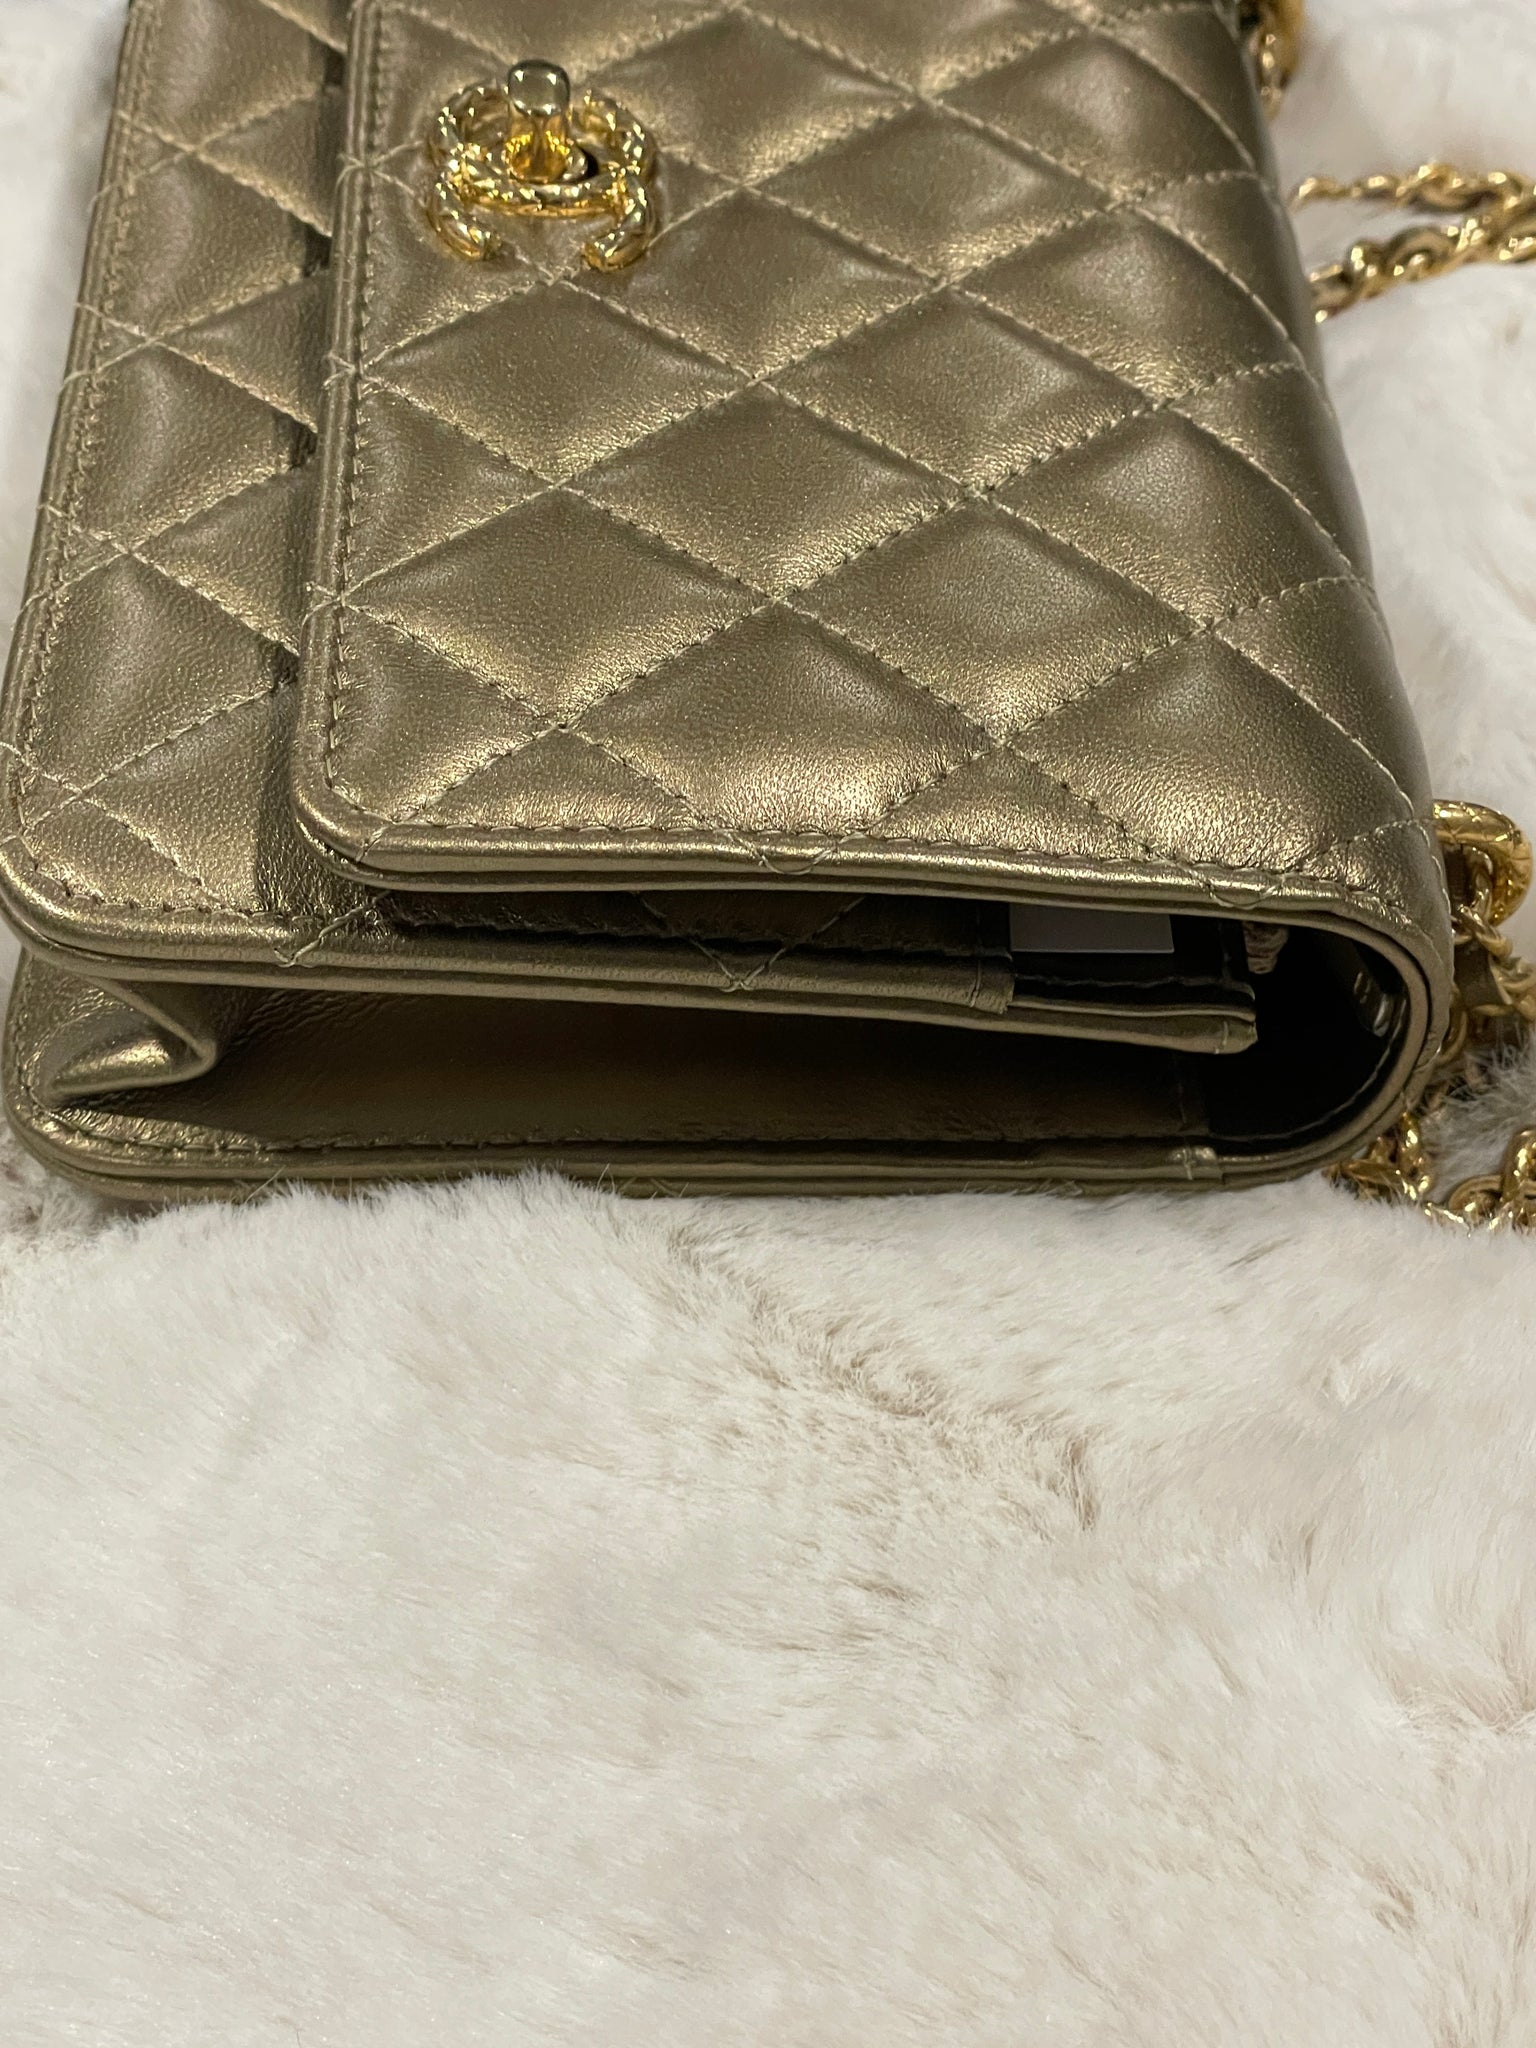 Chanel Gold WOC Wallet On Chain Handbag